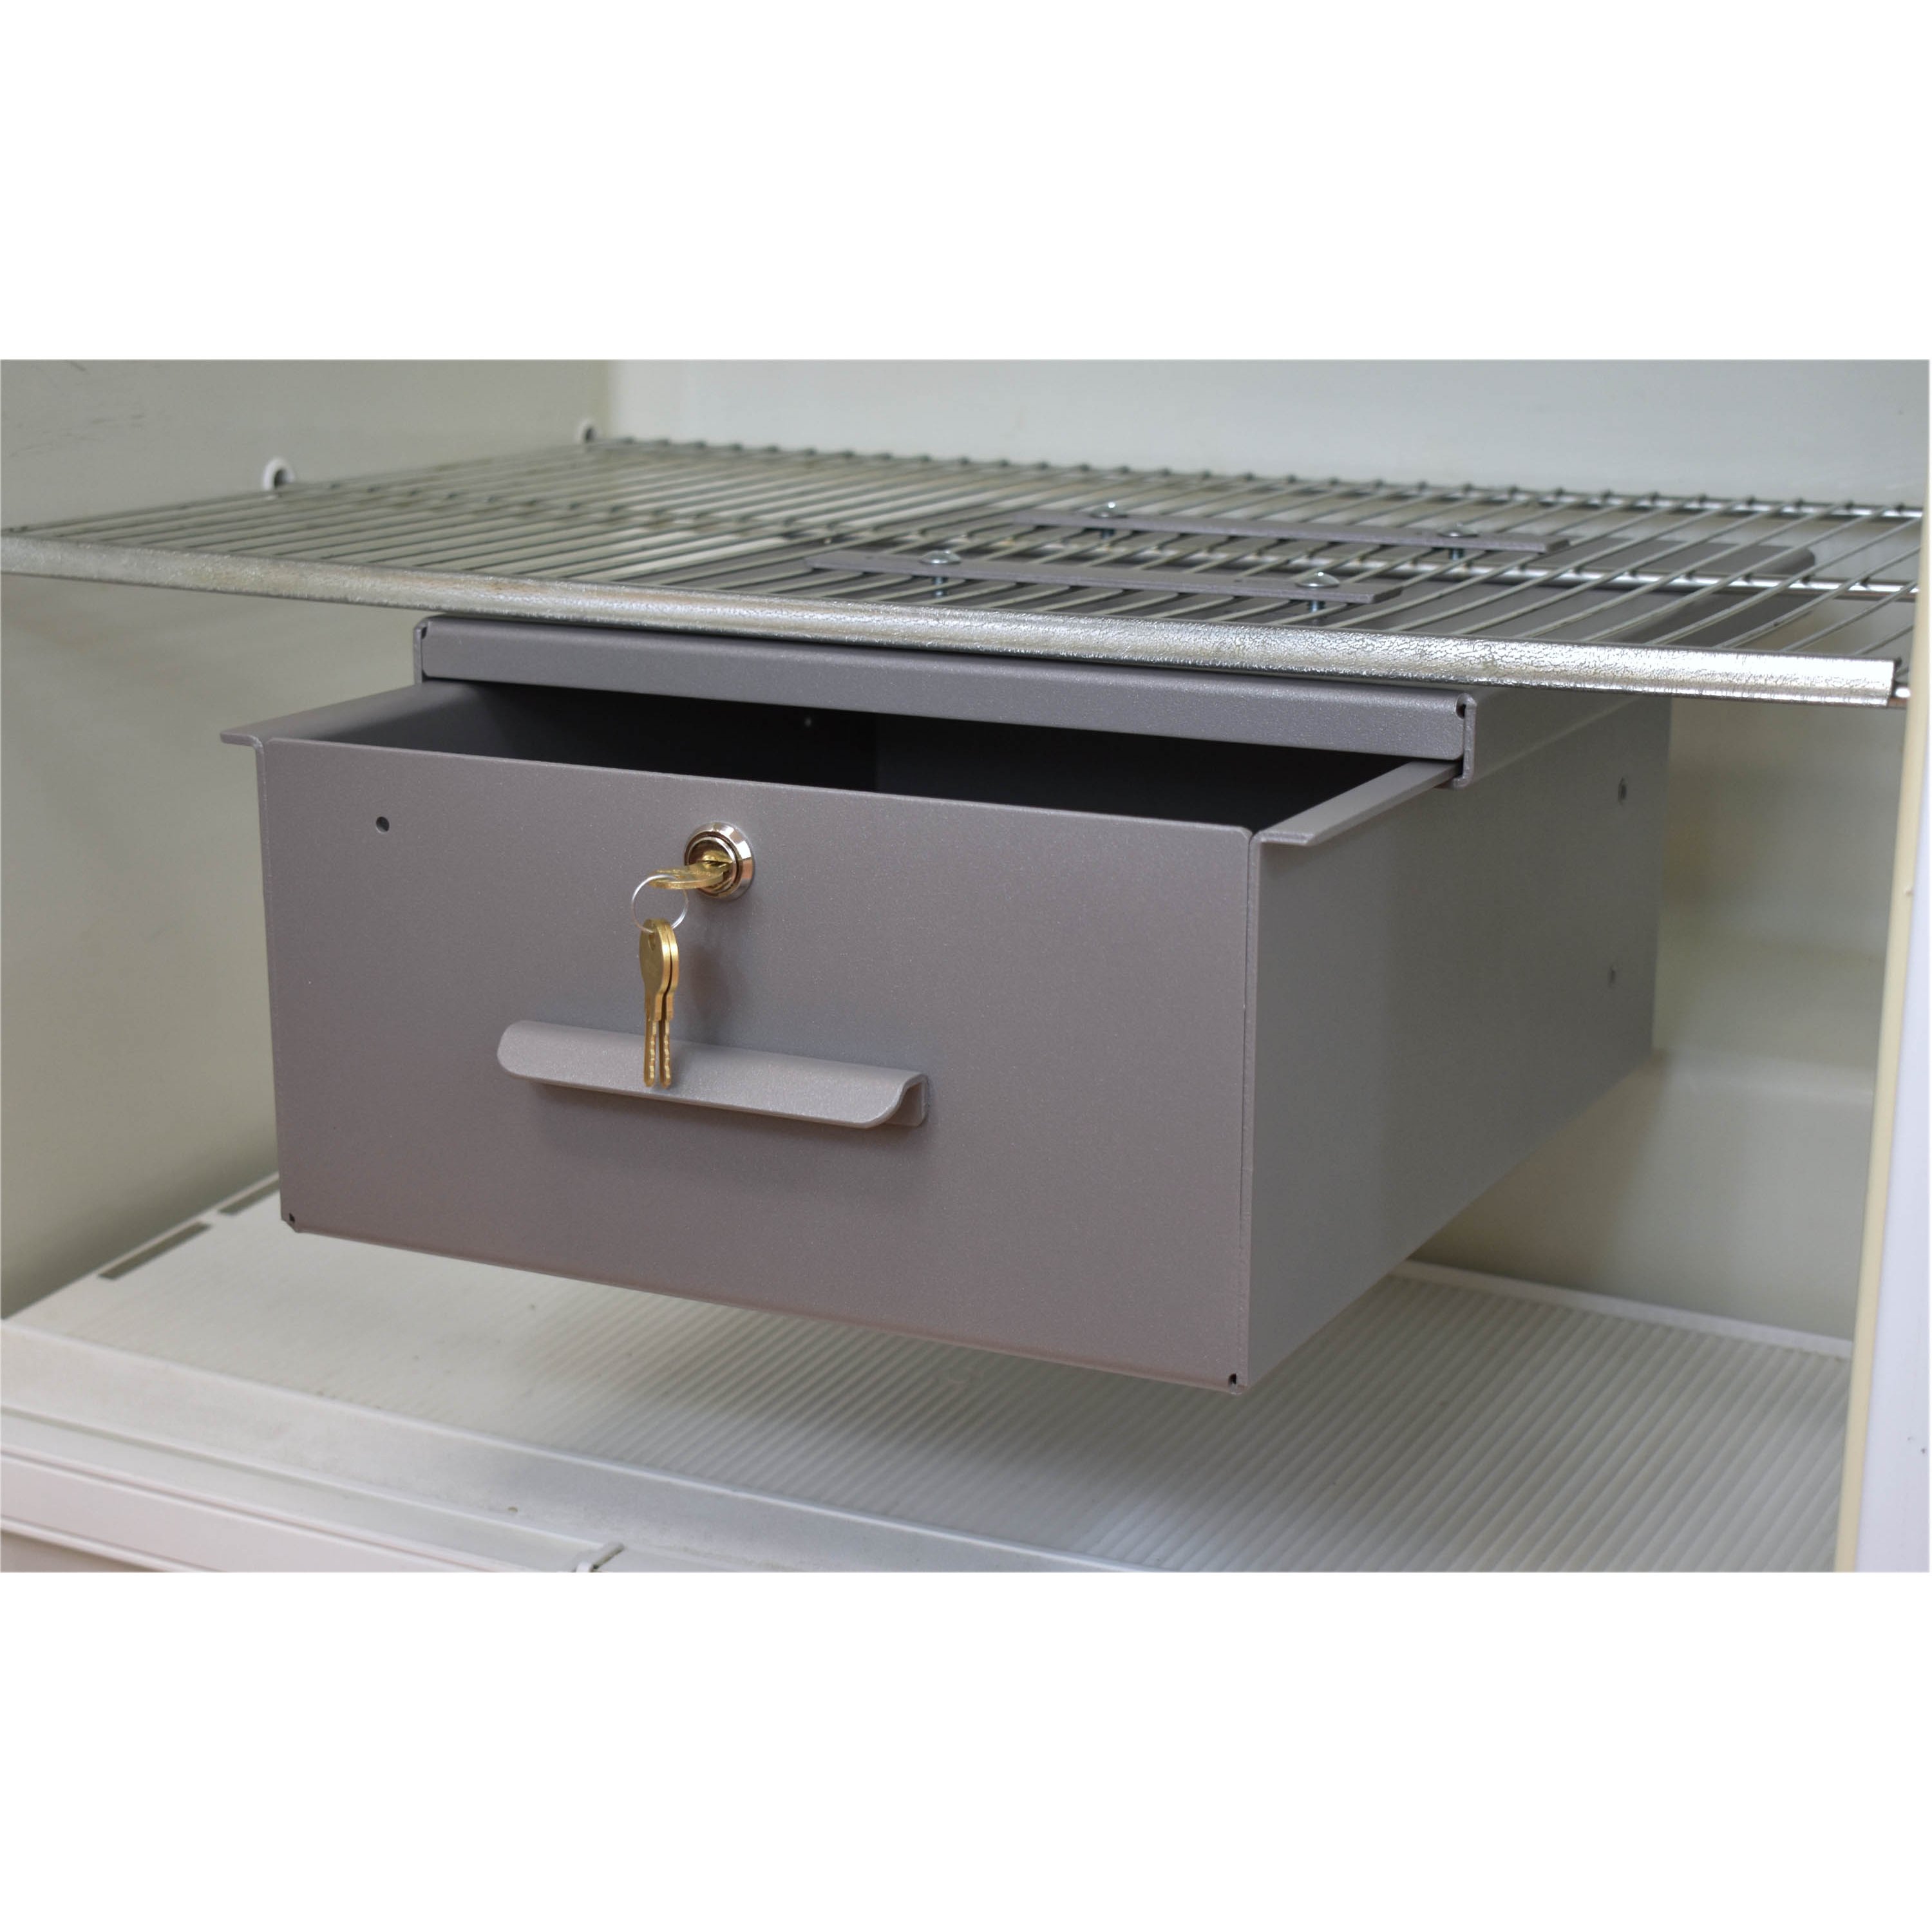 https://www.universalmedicalinc.com/media/catalog/product/cache/f176254afc5001a35a1c727280299a84/1/8/183035_large-aluminum-refrigerator-lock-box-with-key-lock-angle-left.jpg